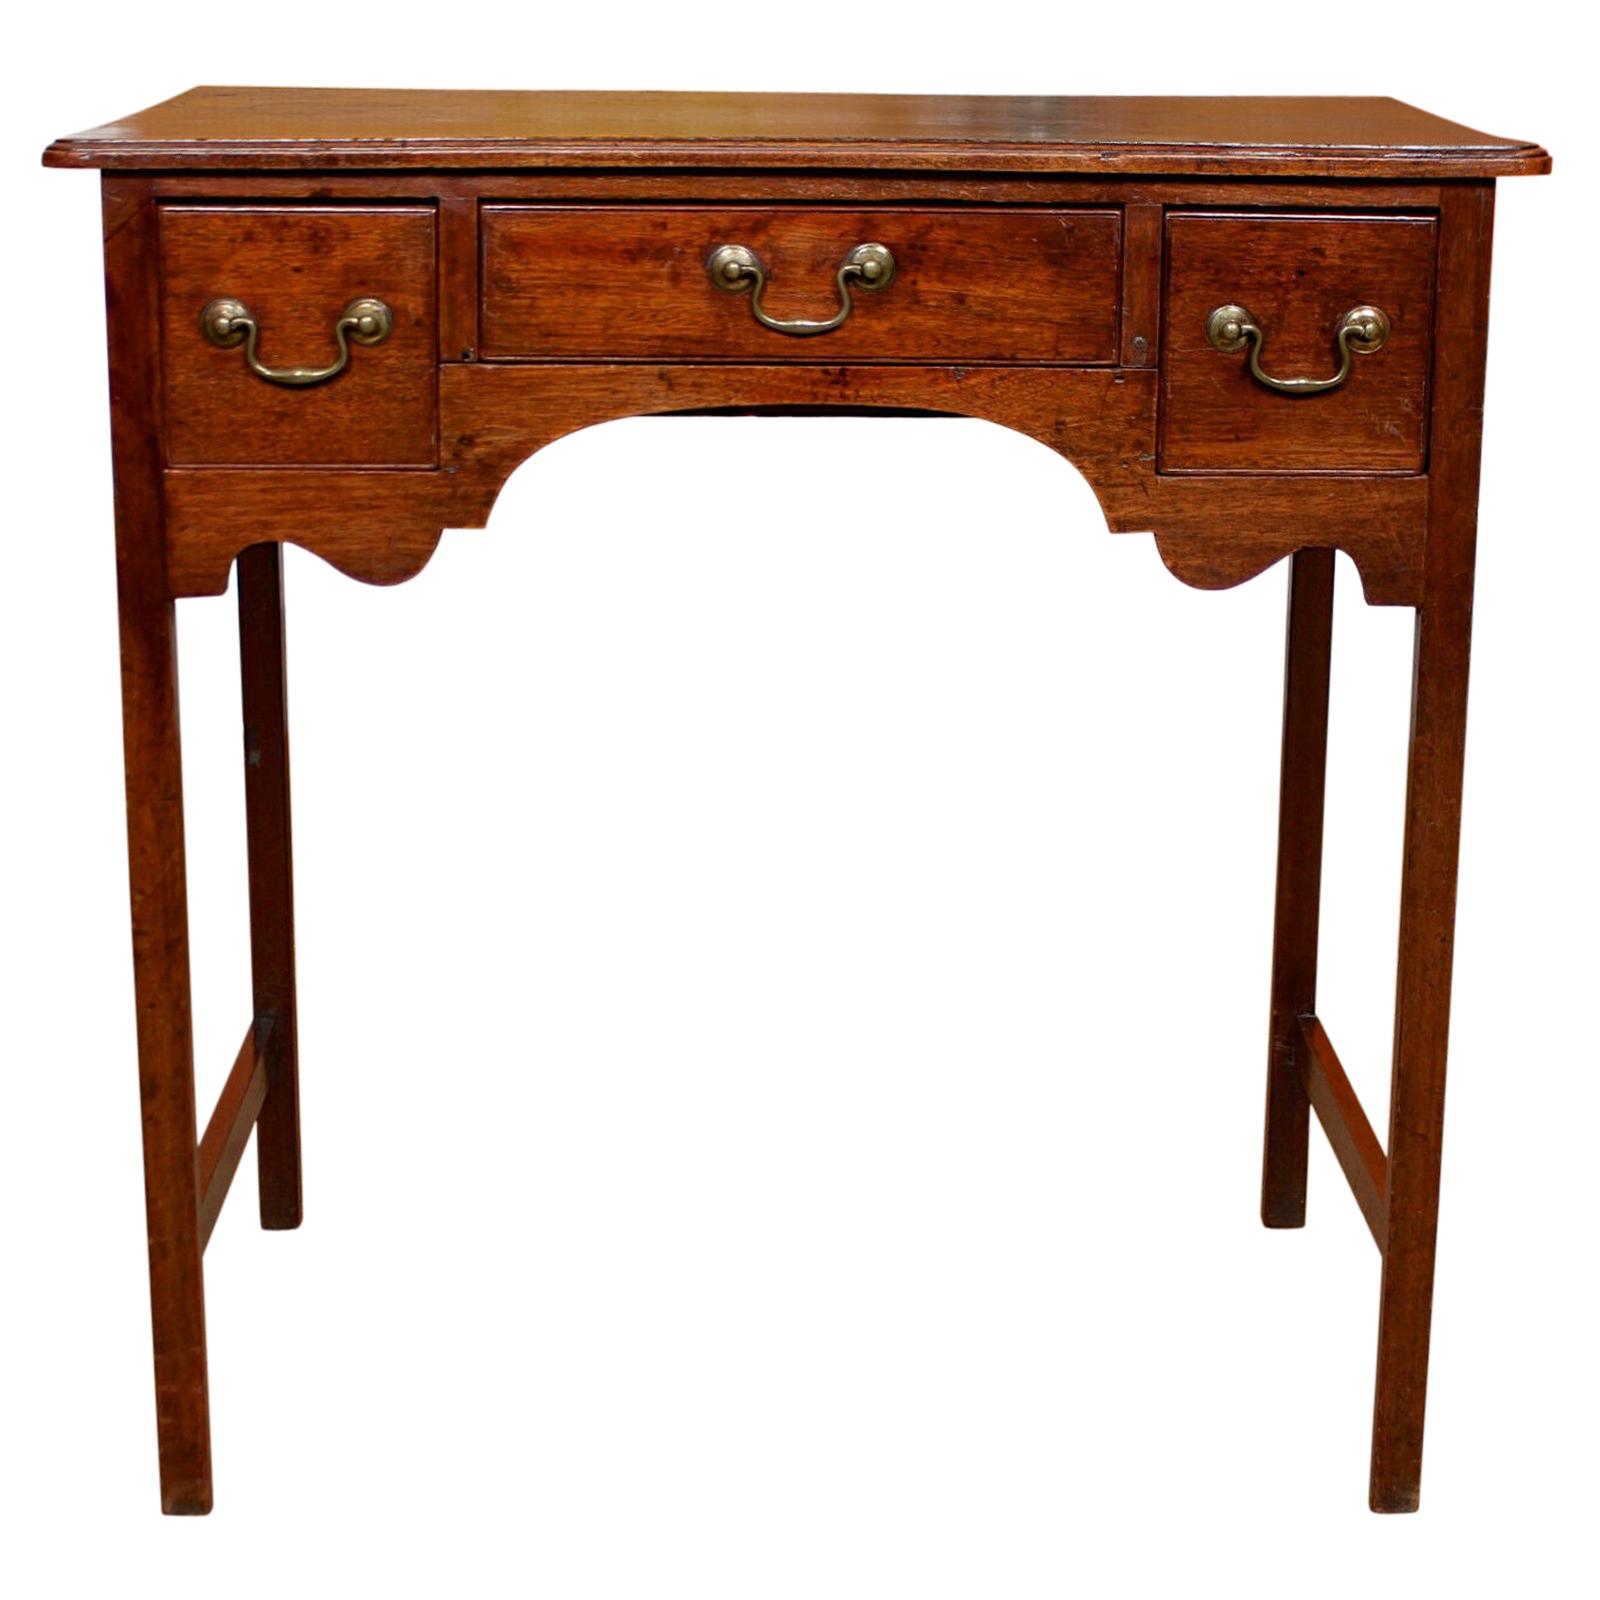 English Georgian Desk 18th Century Writing Table Lowboy Mahogany George III For Sale